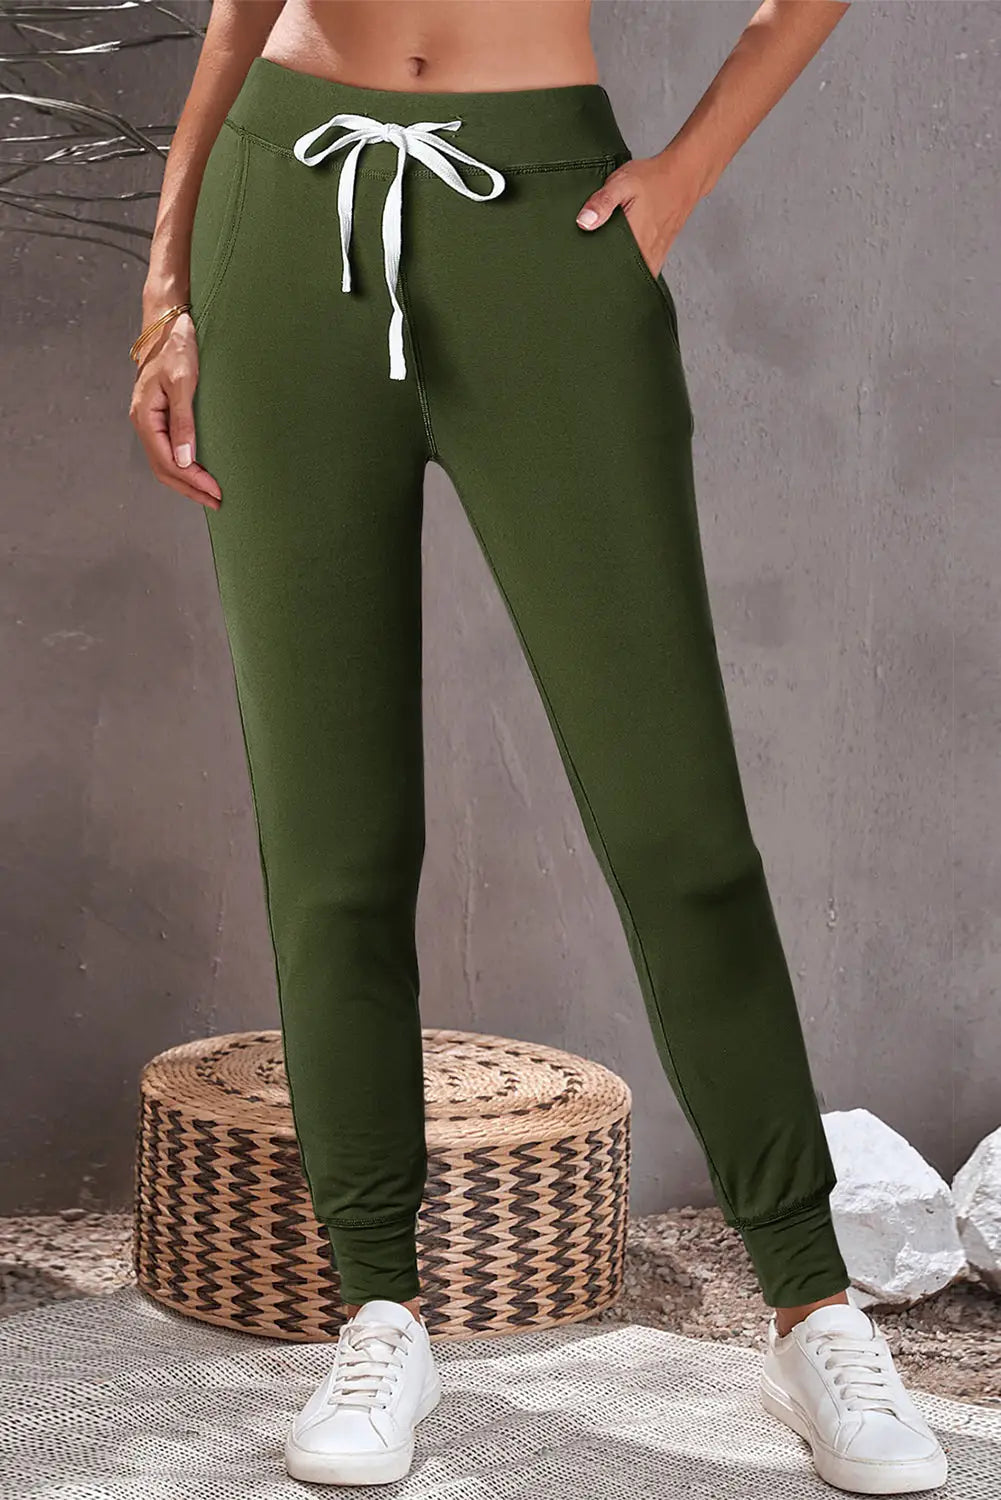 Gray drawstring waist pocketed joggers - moss green / 2xl / 90% polyester + 10% elastane - bottoms